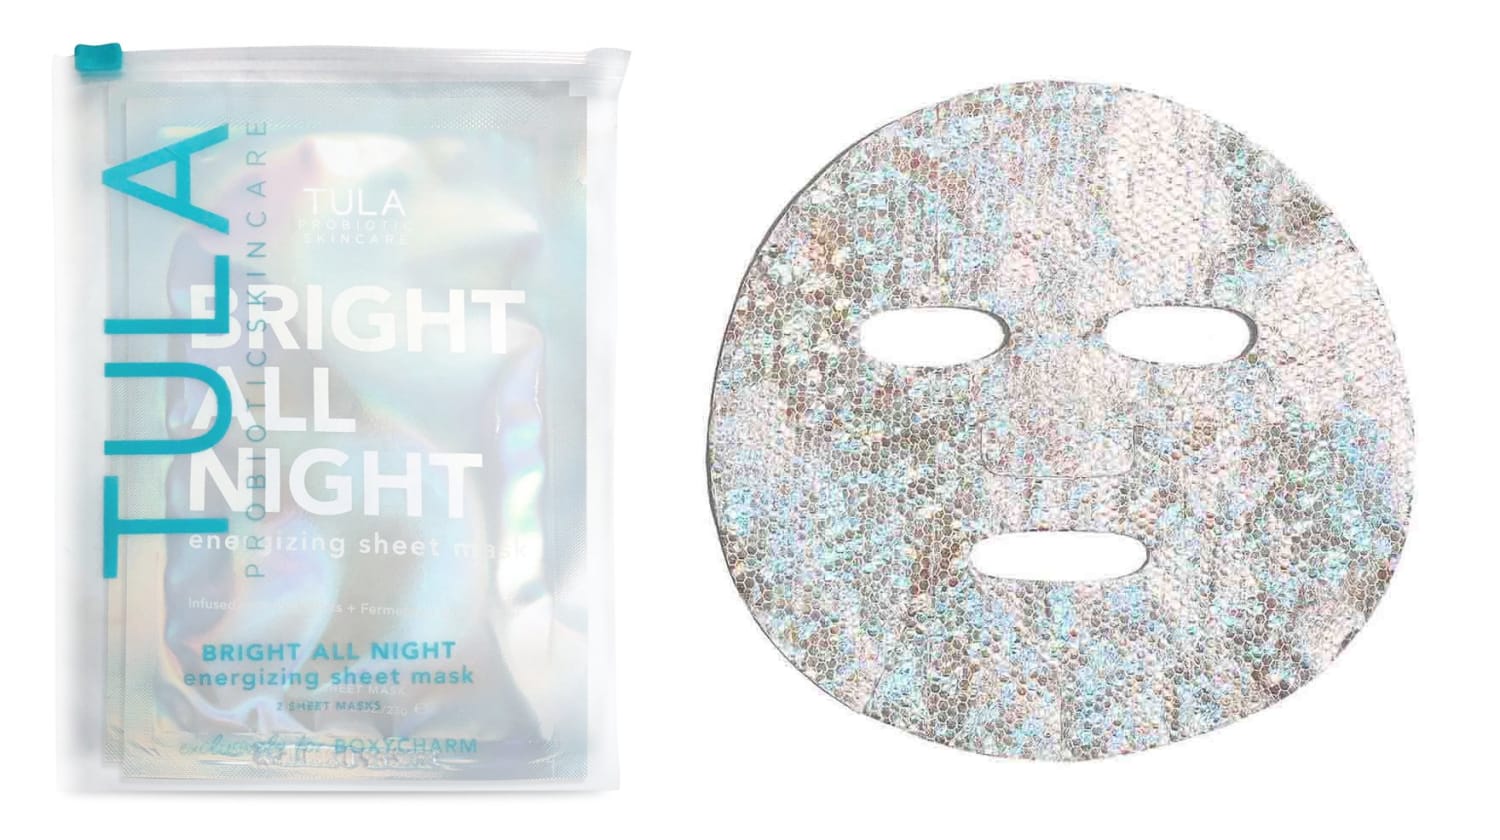 TULA Bright All Night Sheet Mask Review